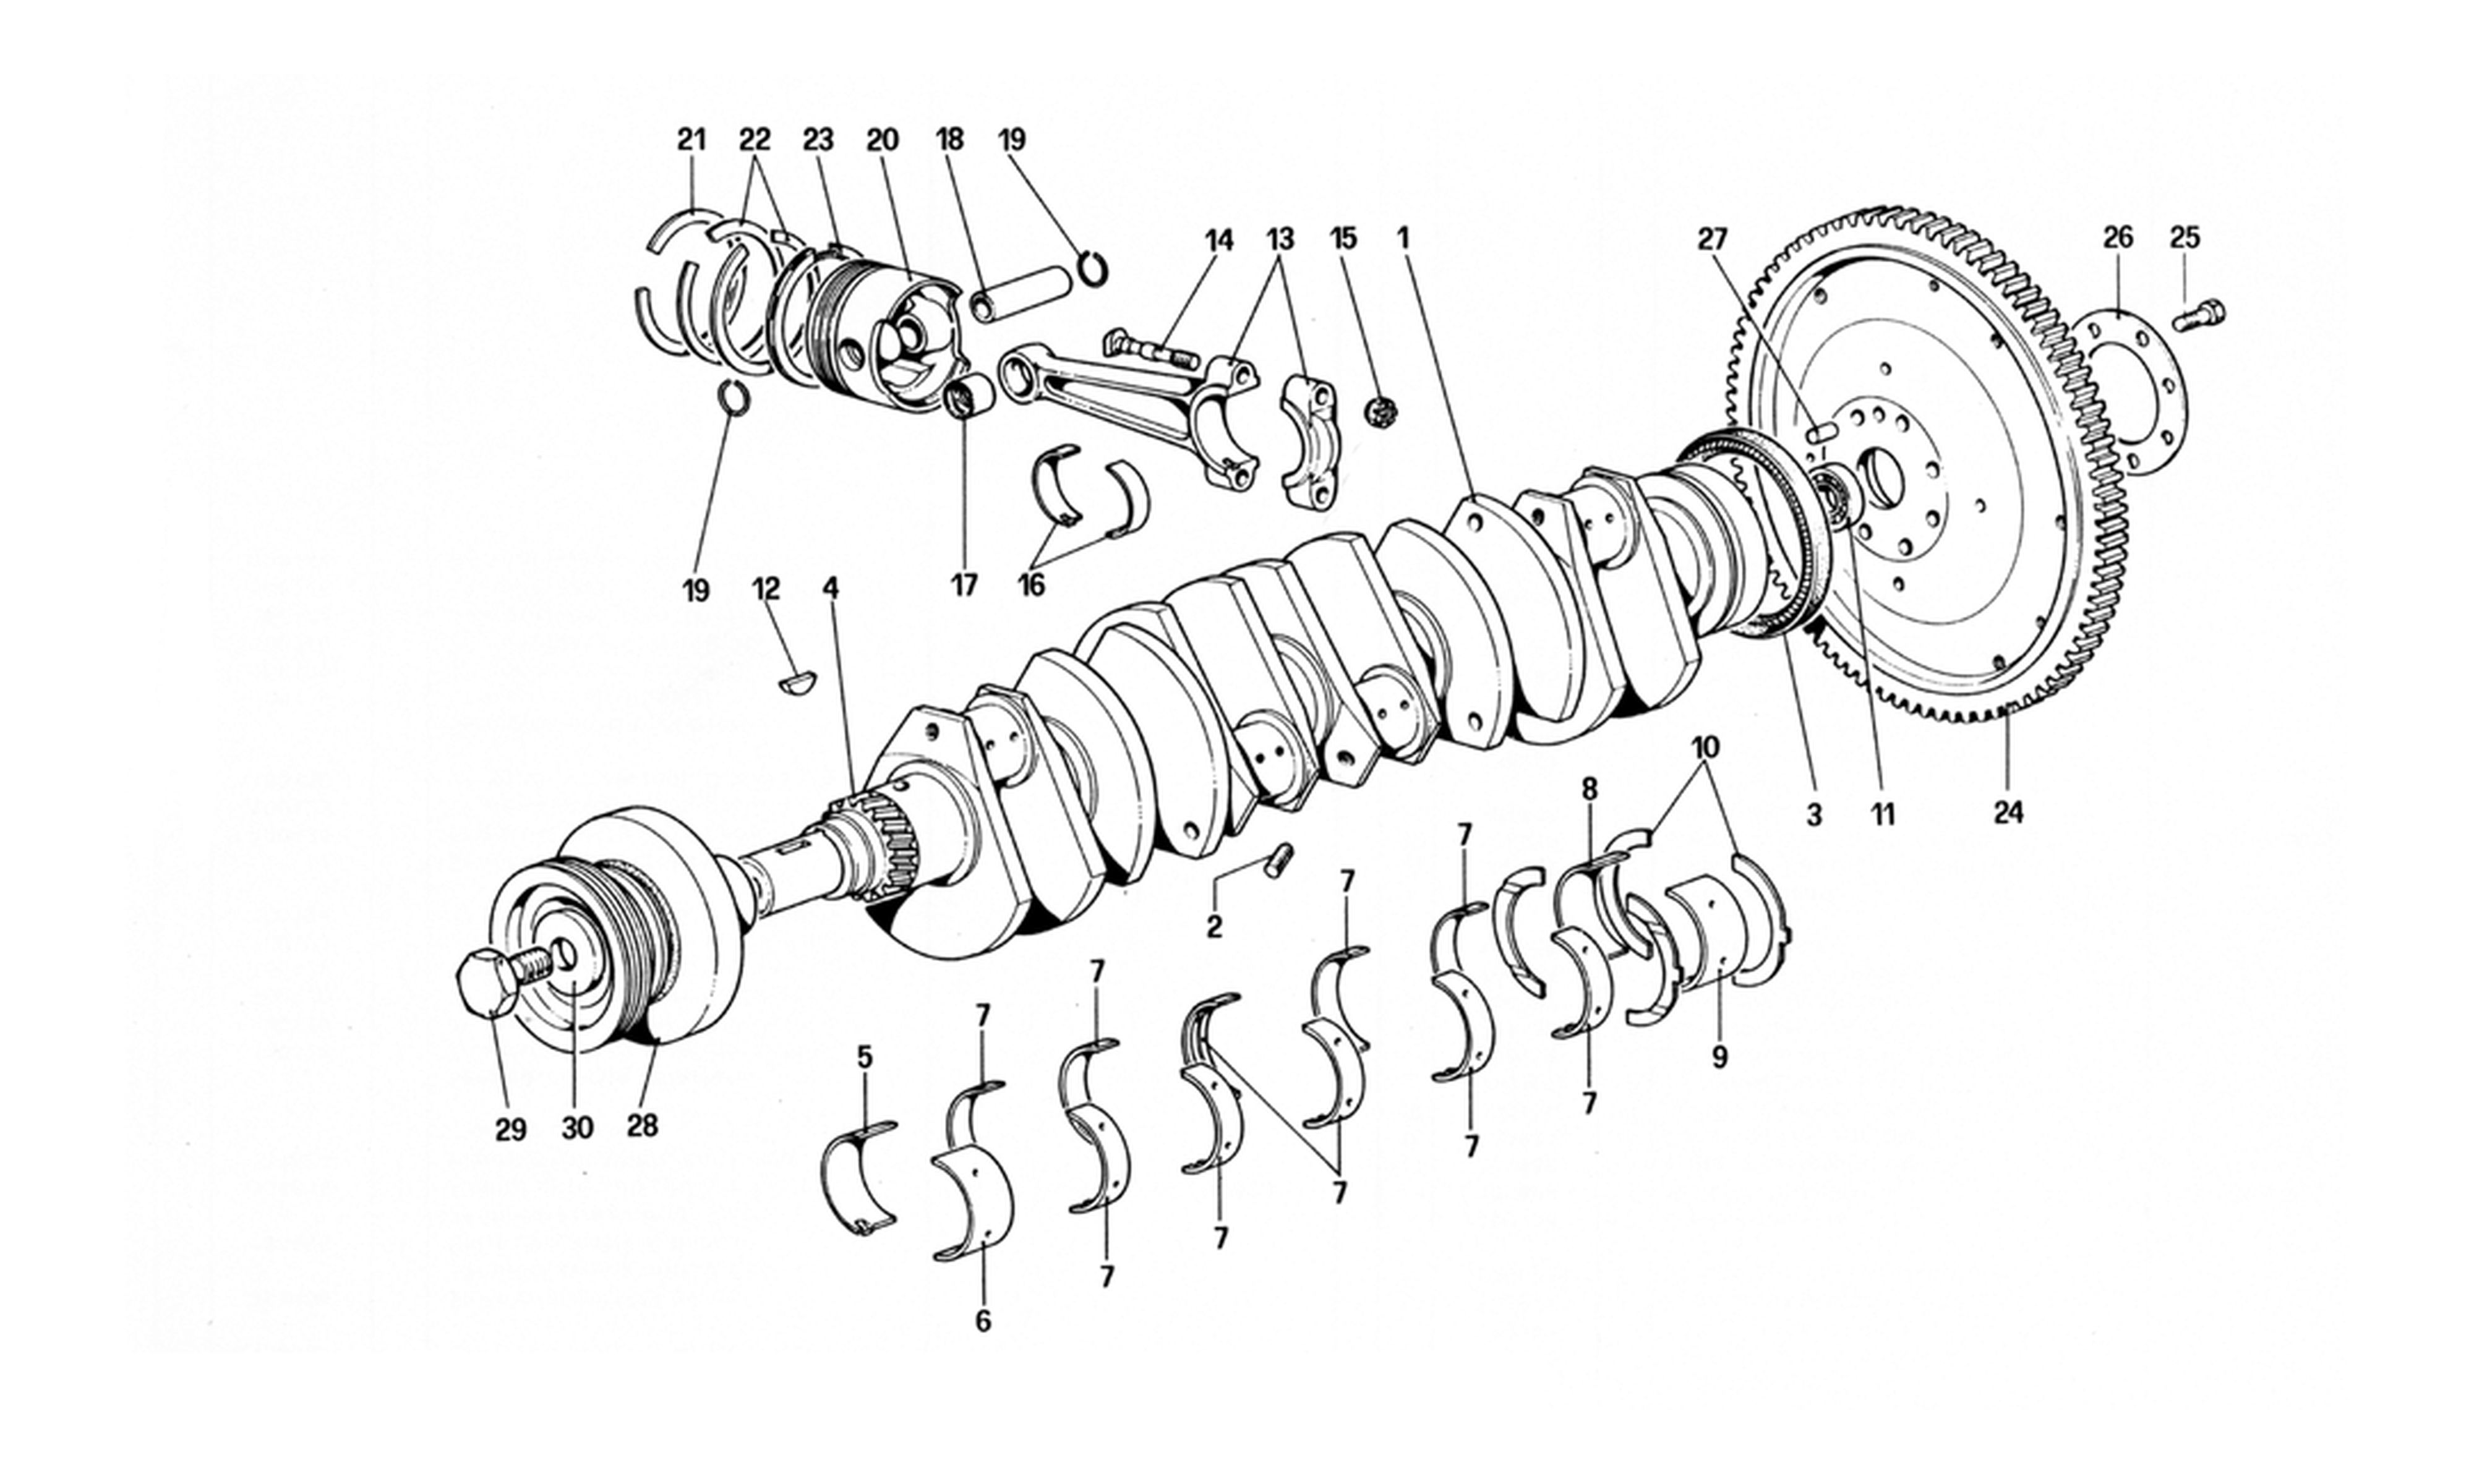 Schematic: Crankshaft, Connecting Rods And Pistons